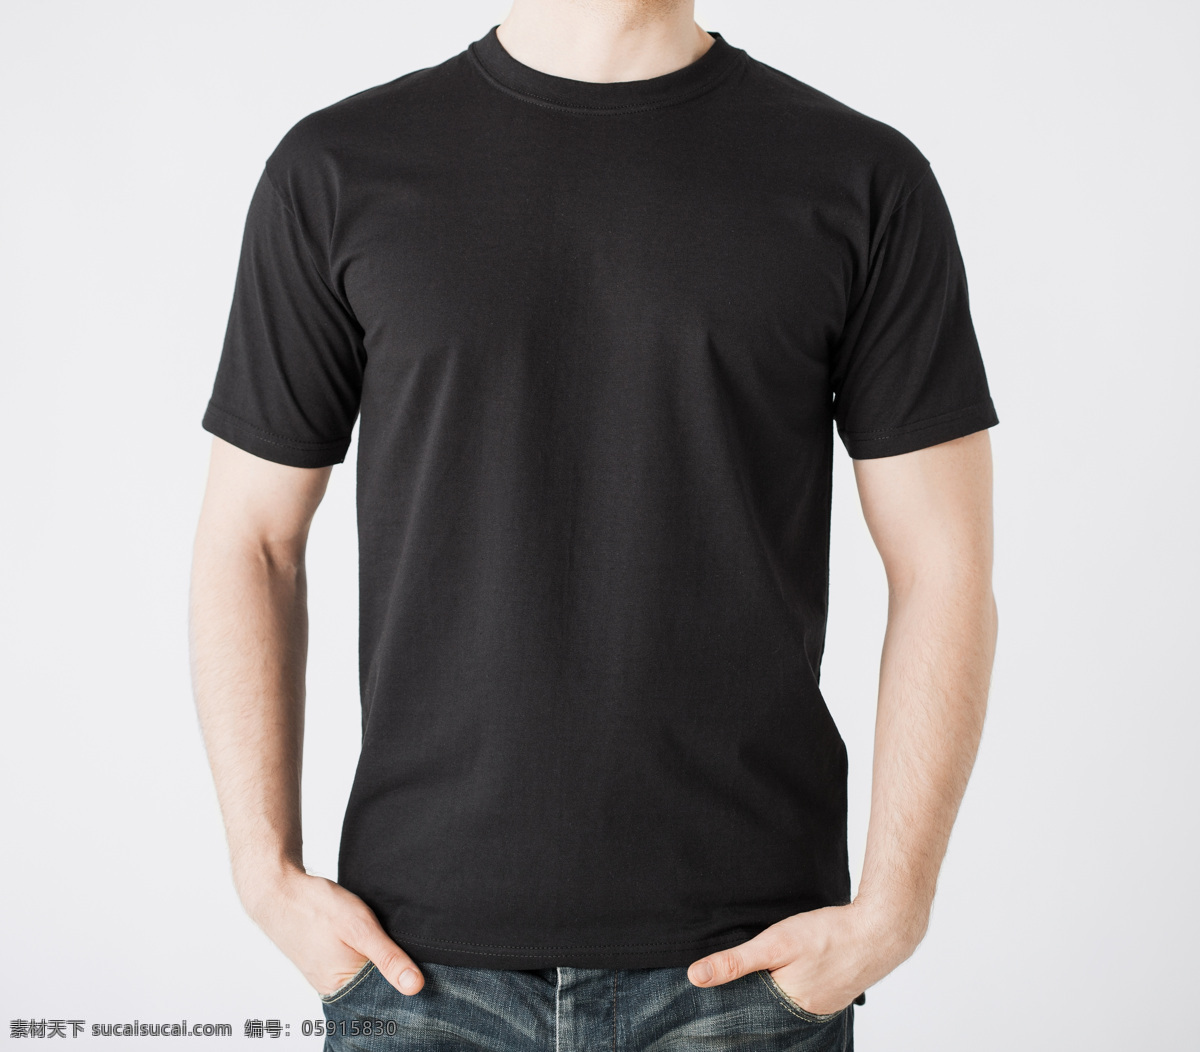 t恤设计 t恤 t恤样式 服装设计 衬衫 生活素材 生活百科